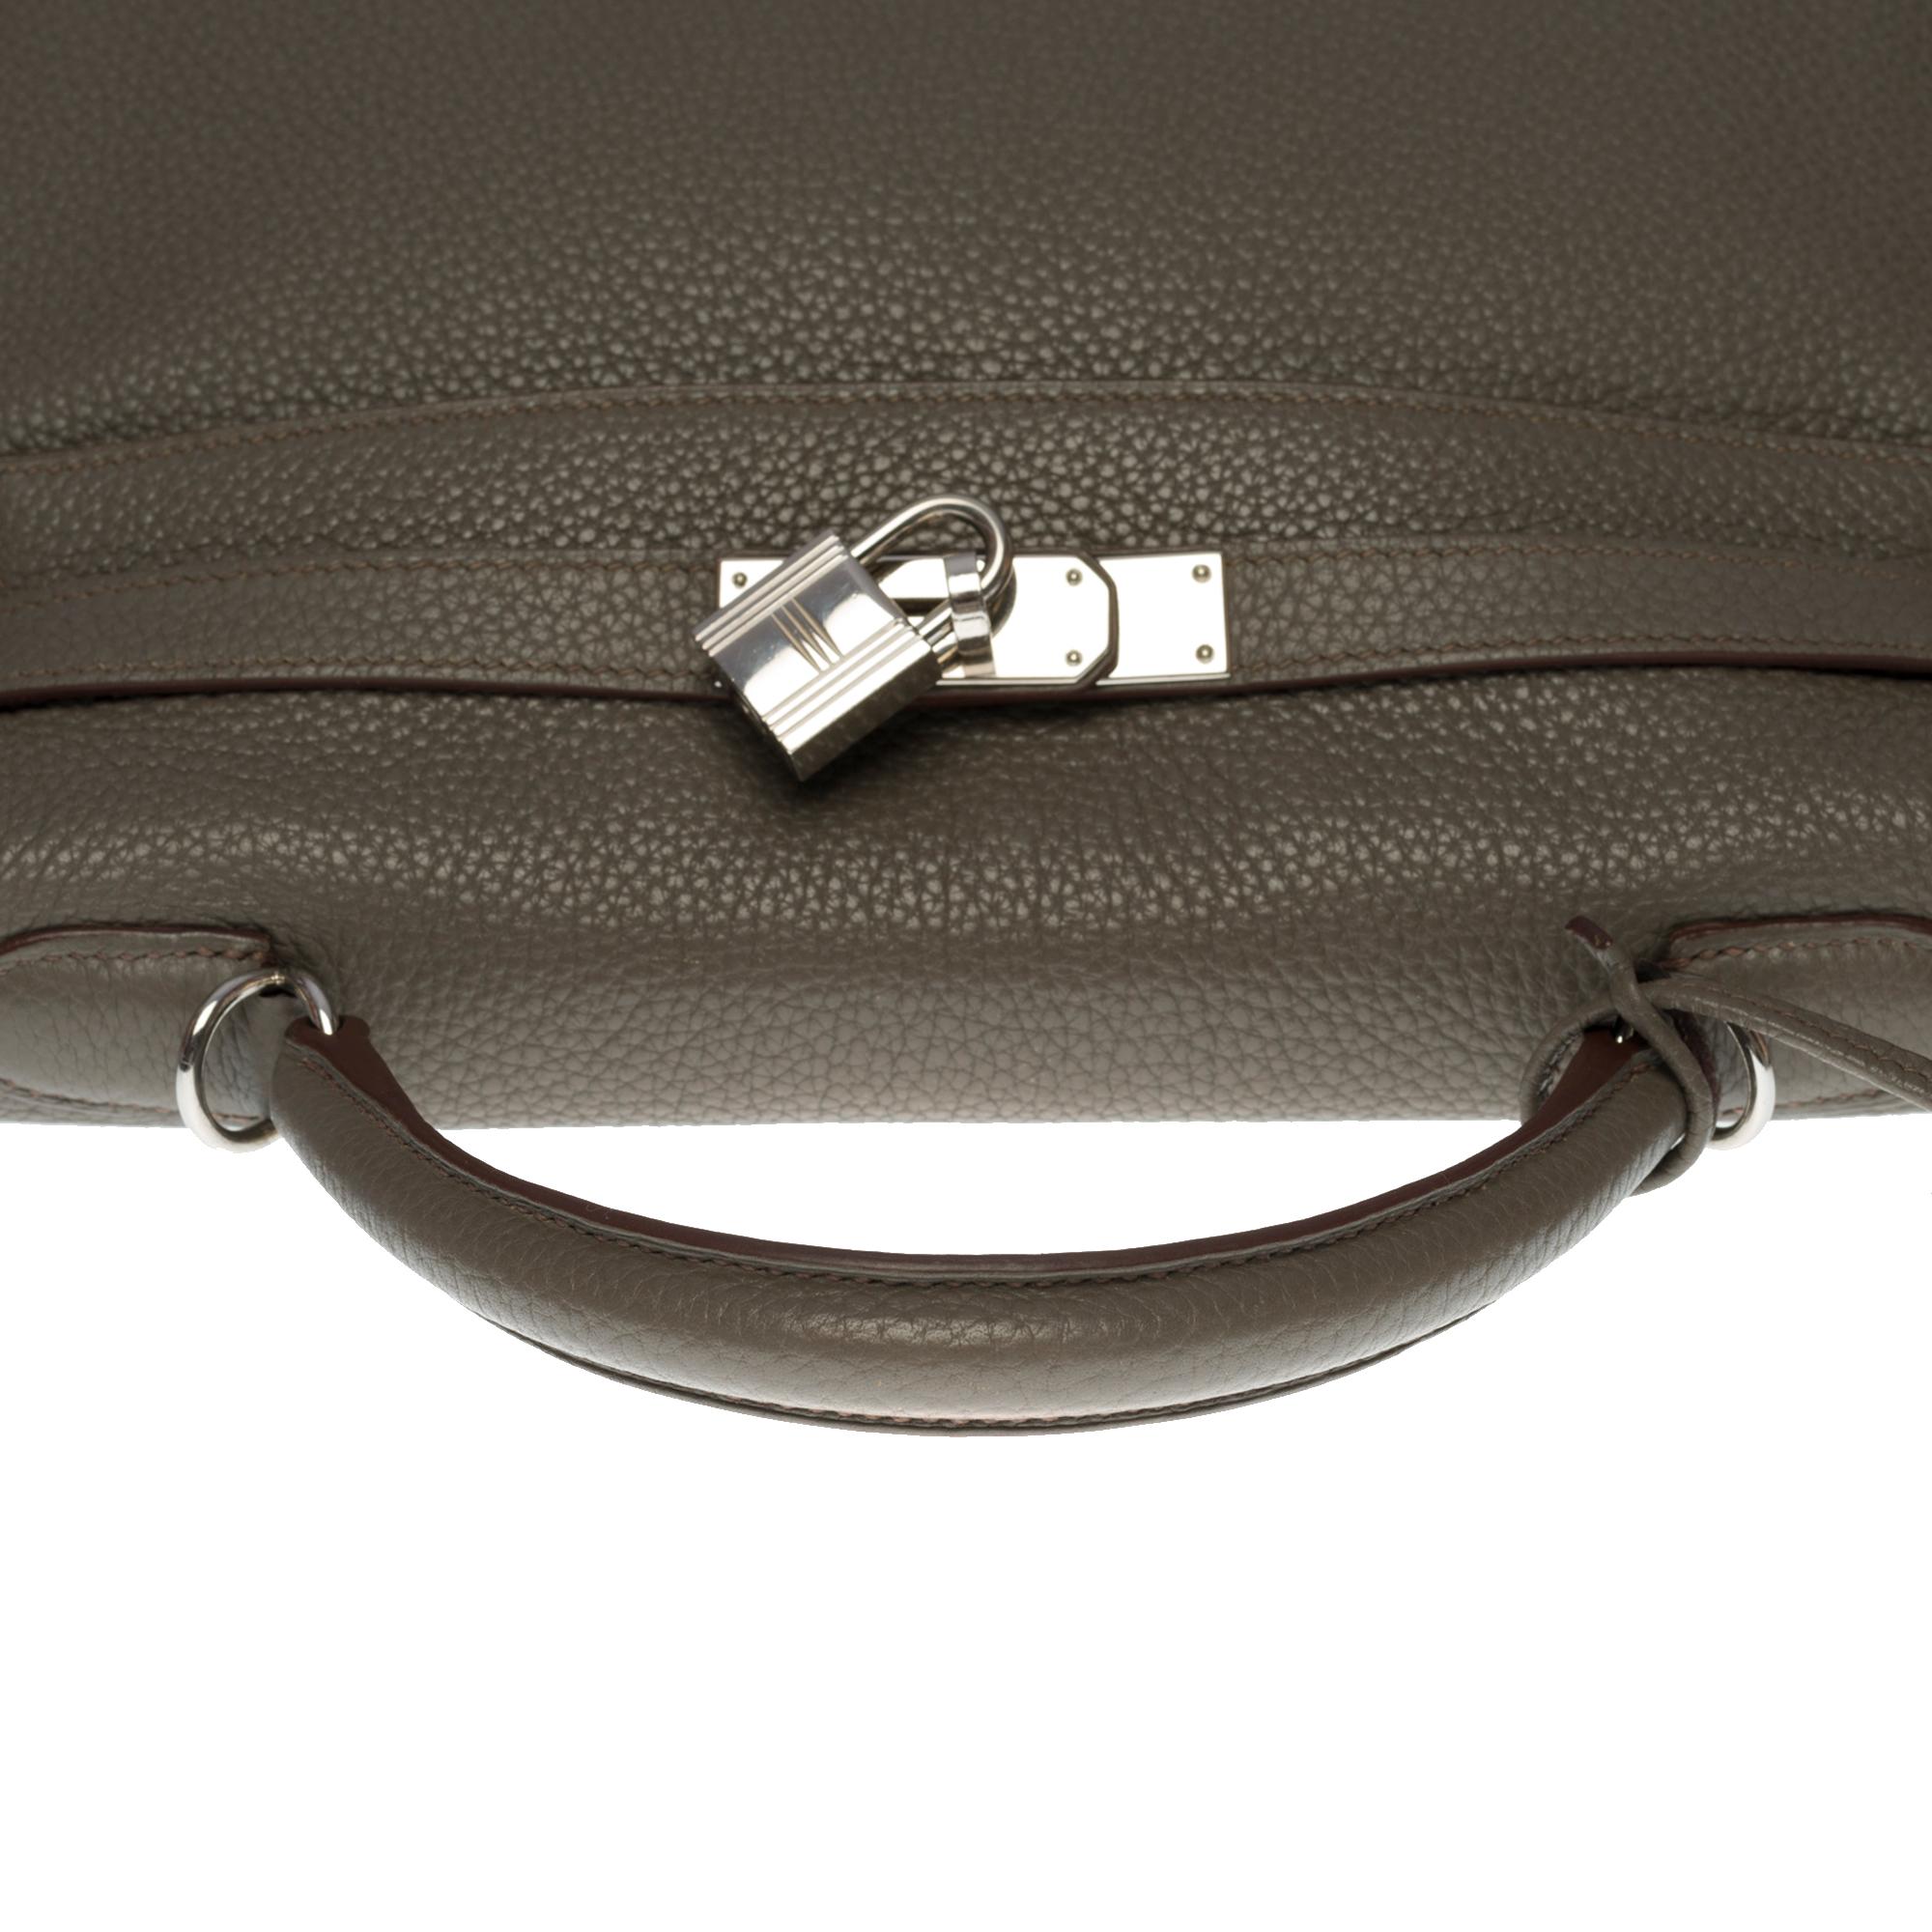 Exquisite Hermès Kelly 32cm retourne handbag strap in Etain Togo leather, SHW 1